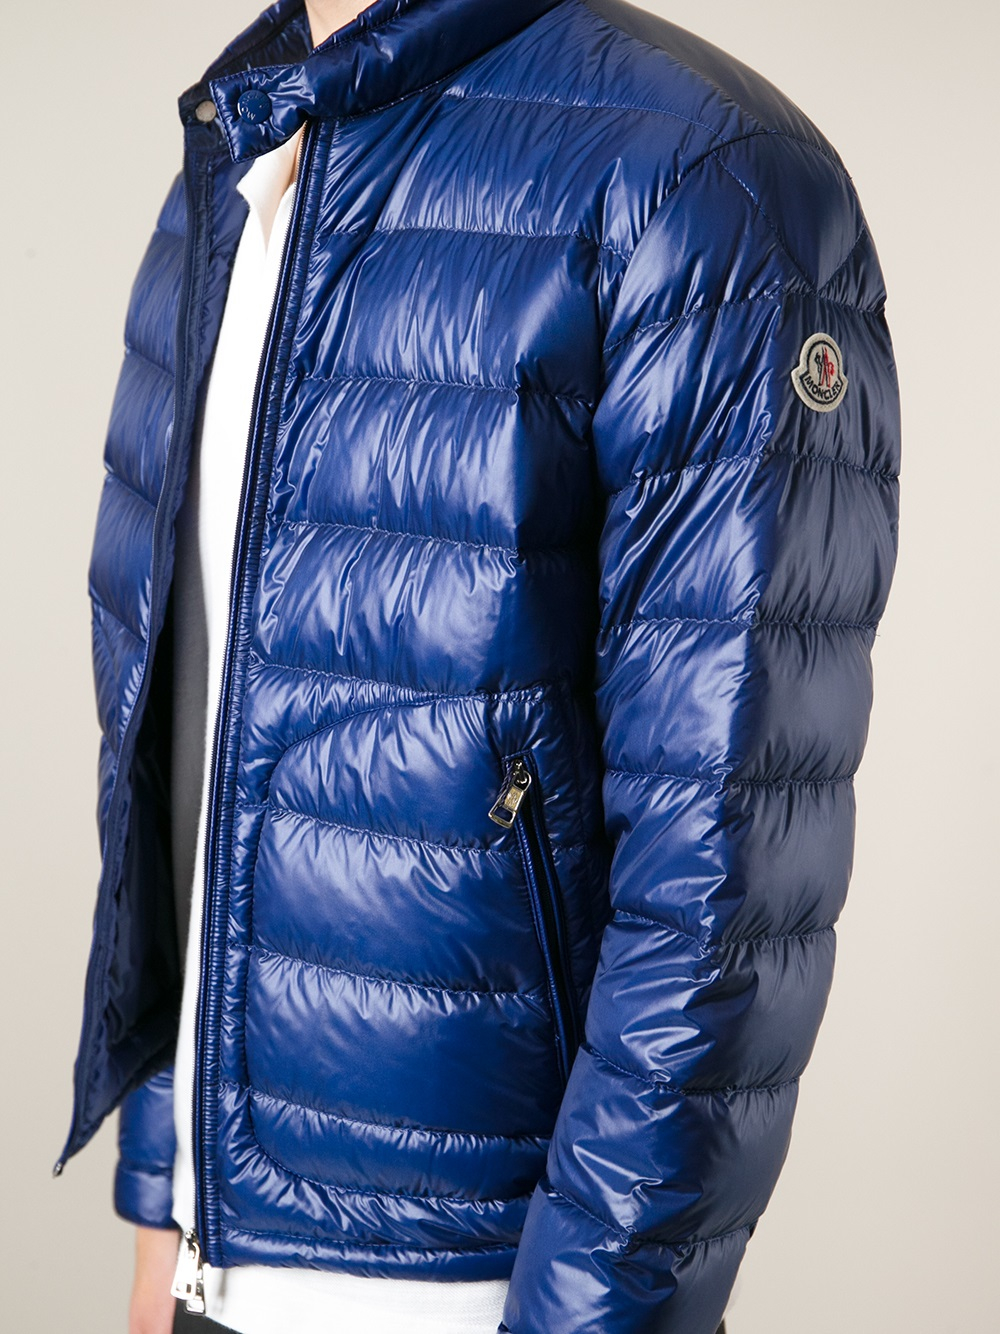 Lyst - Moncler Padded Jacket in Blue for Men